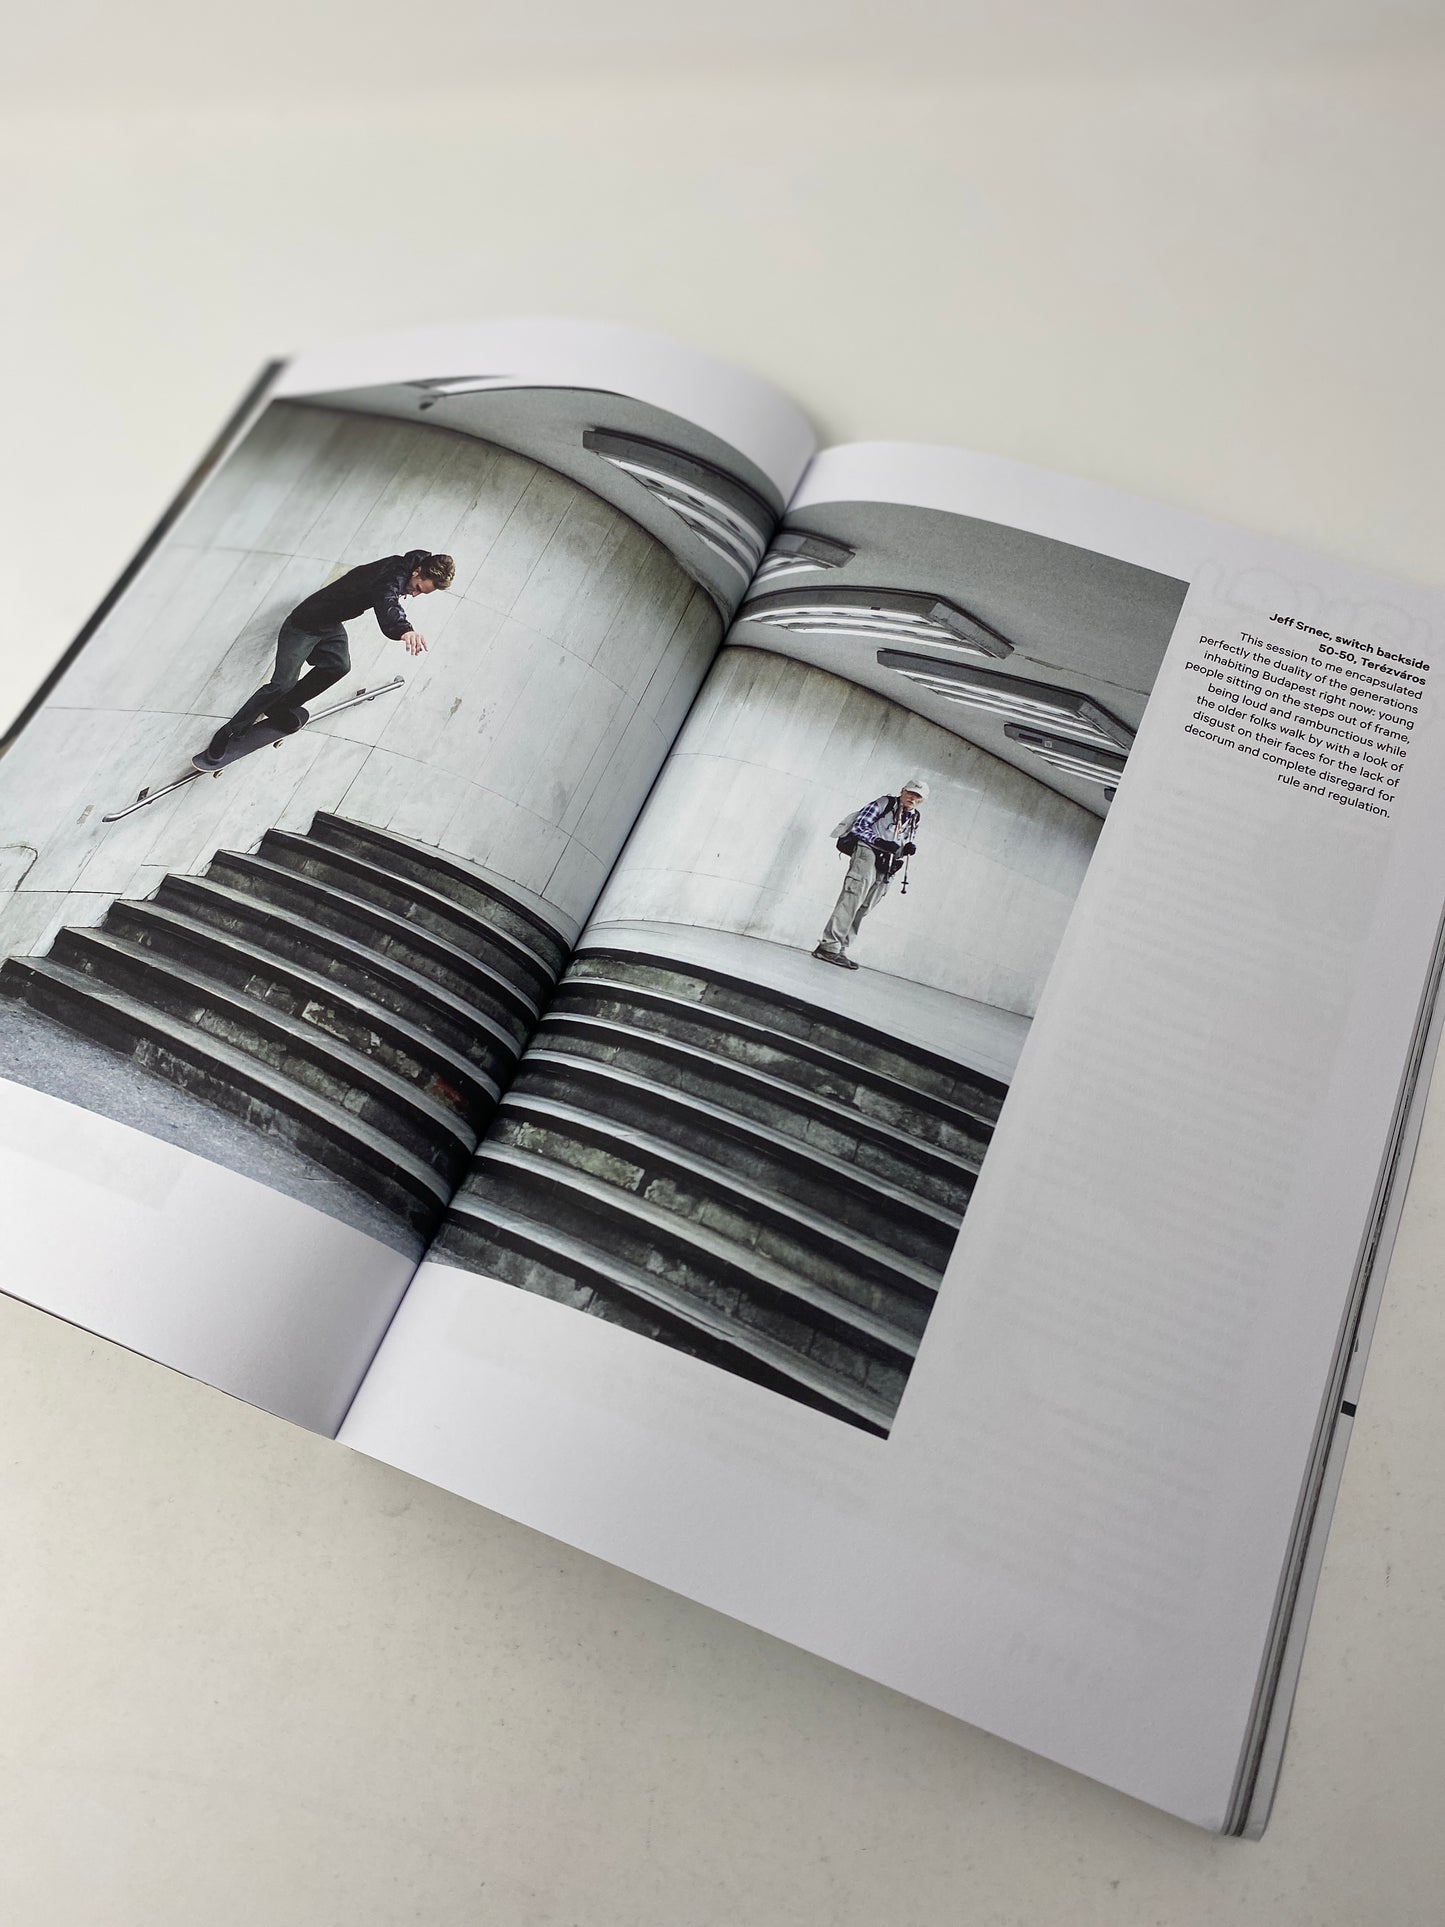 Grey Skate Mag - Vol. 05 - Issue 06